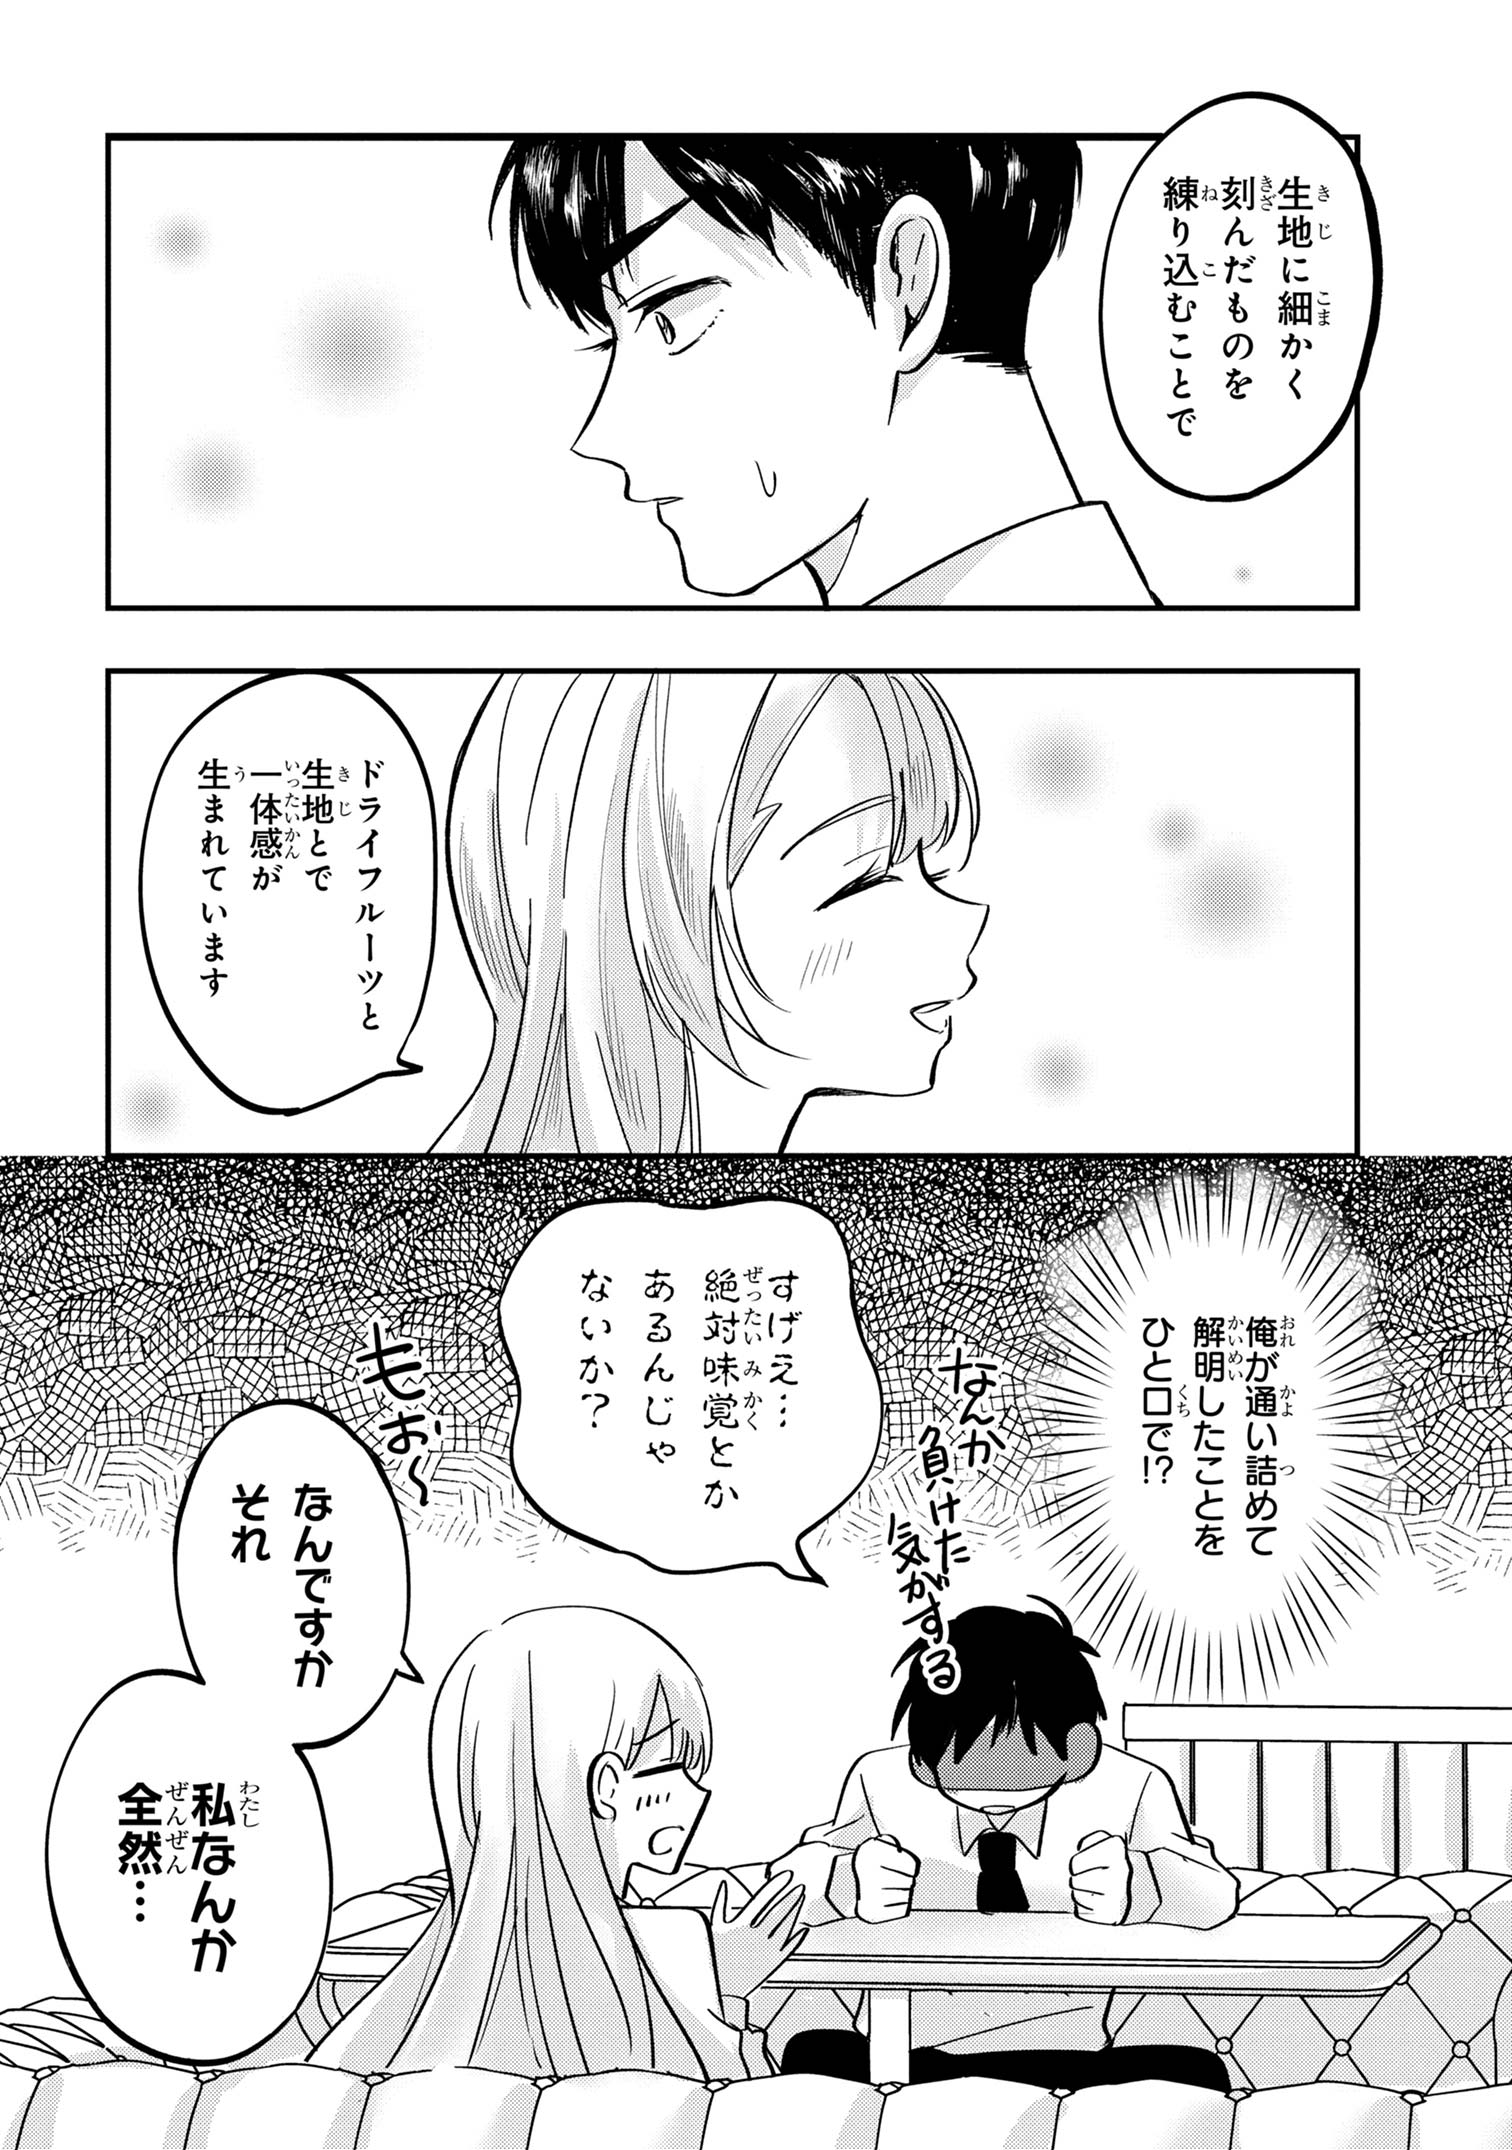 Aisare Tenshi na Classmate ga, Ore ni Dake Itazura ni Hohoemu - Chapter 1 - Page 27